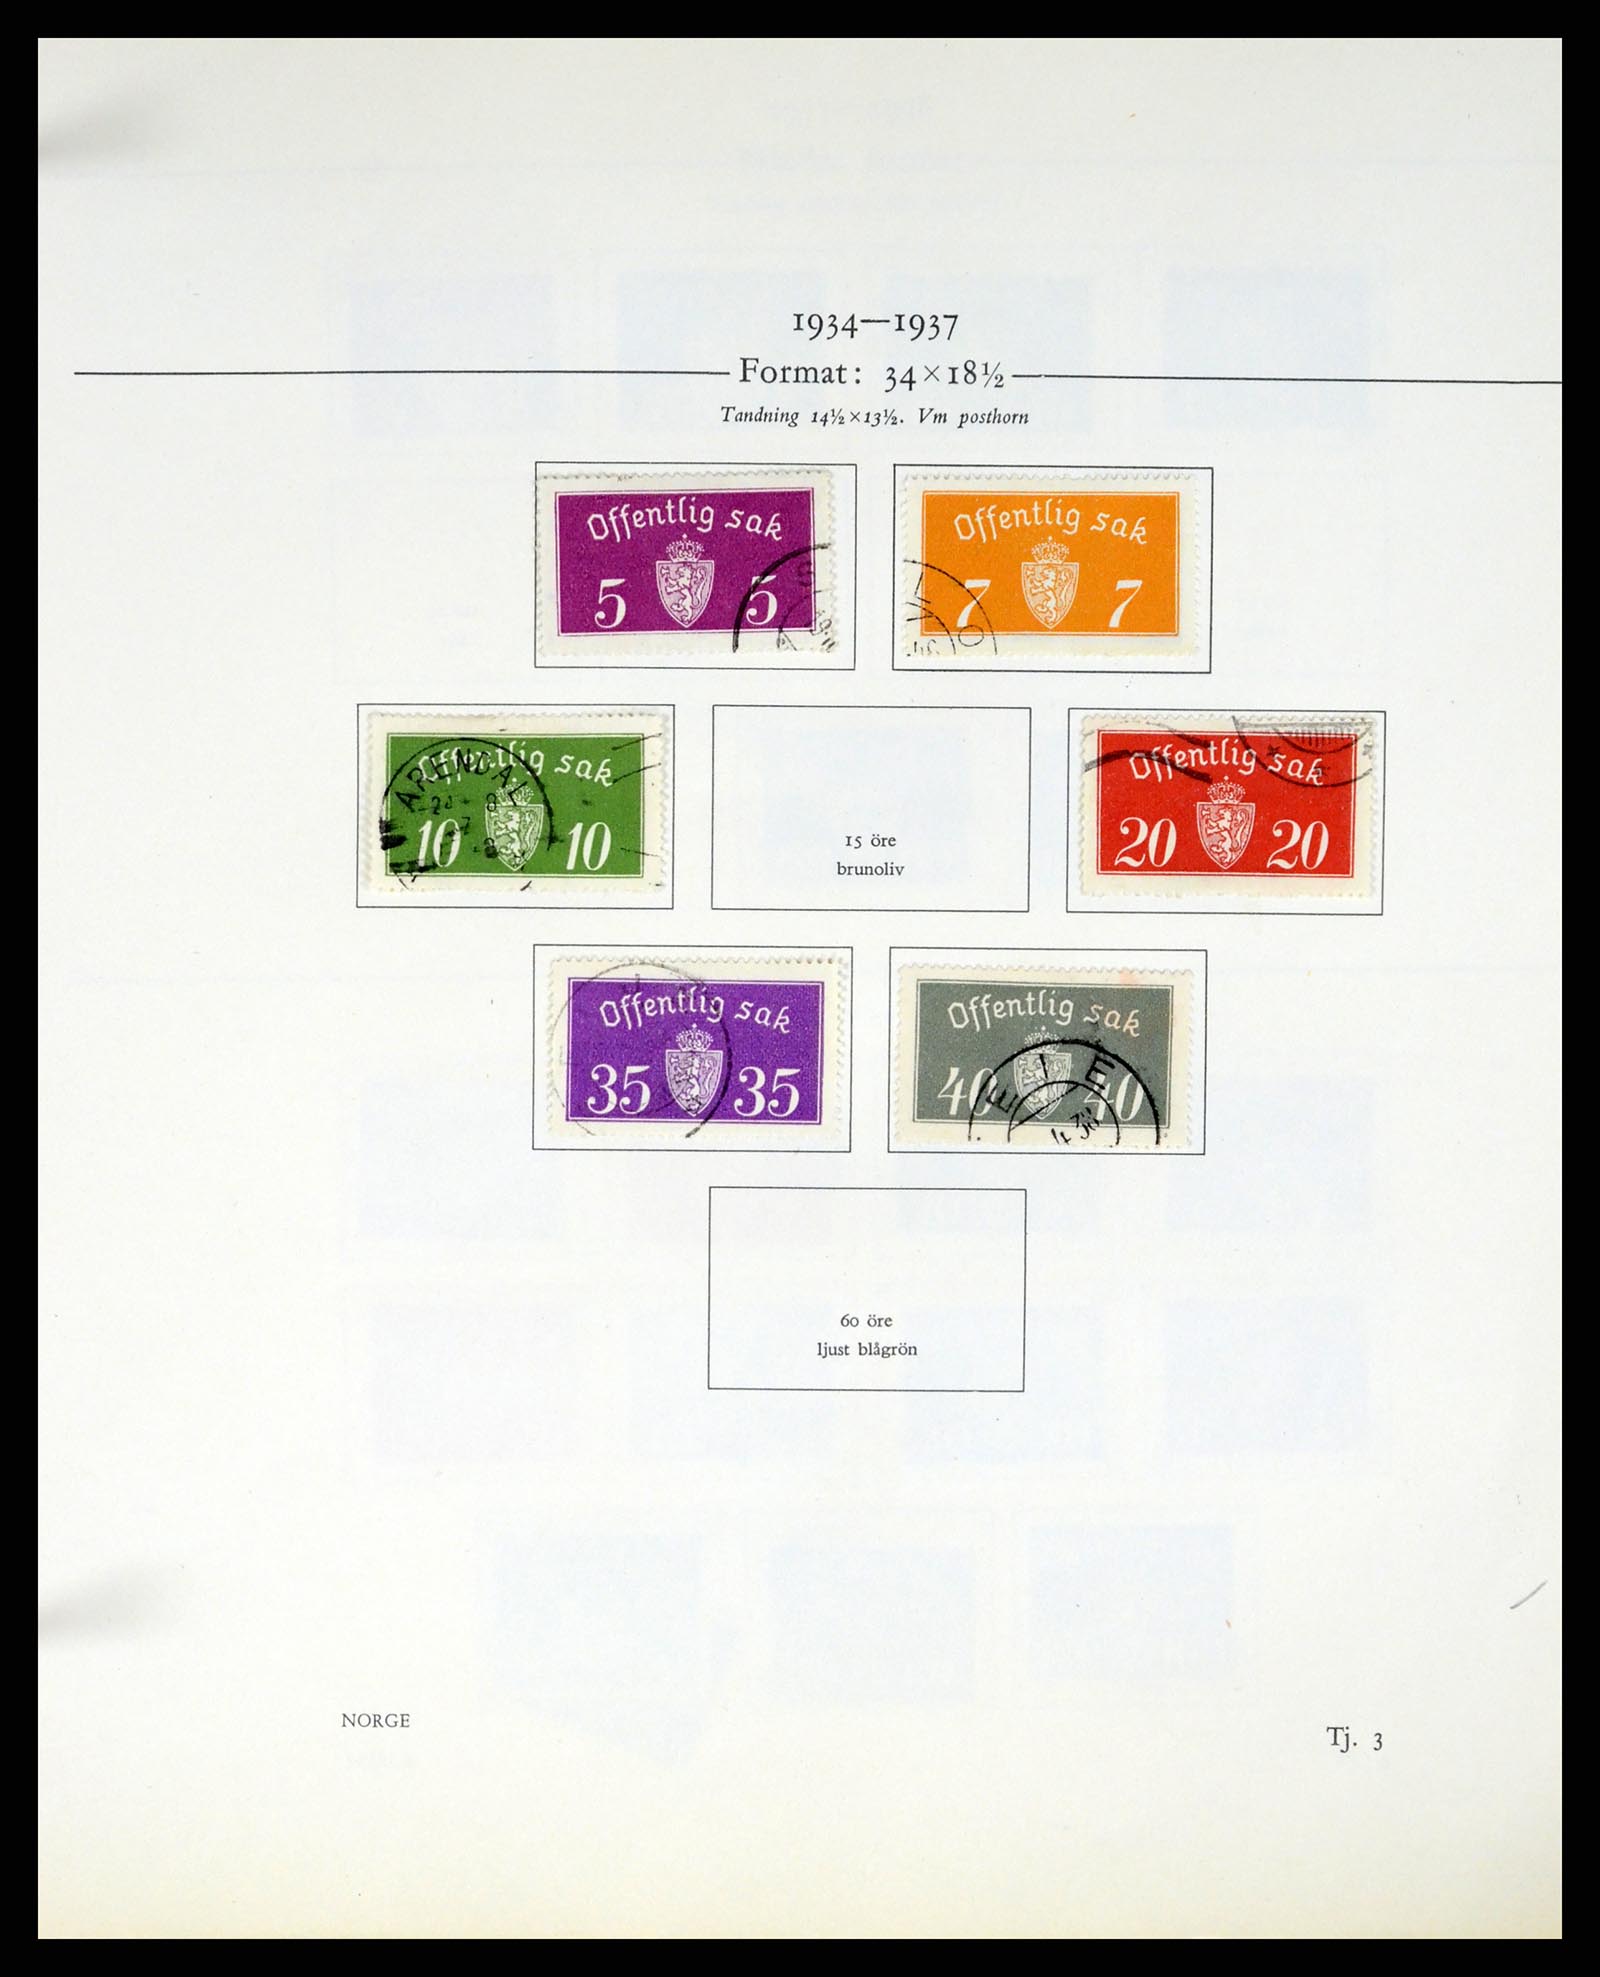 37387 046 - Stamp collection 37387 Scandinavia 1851-1960.